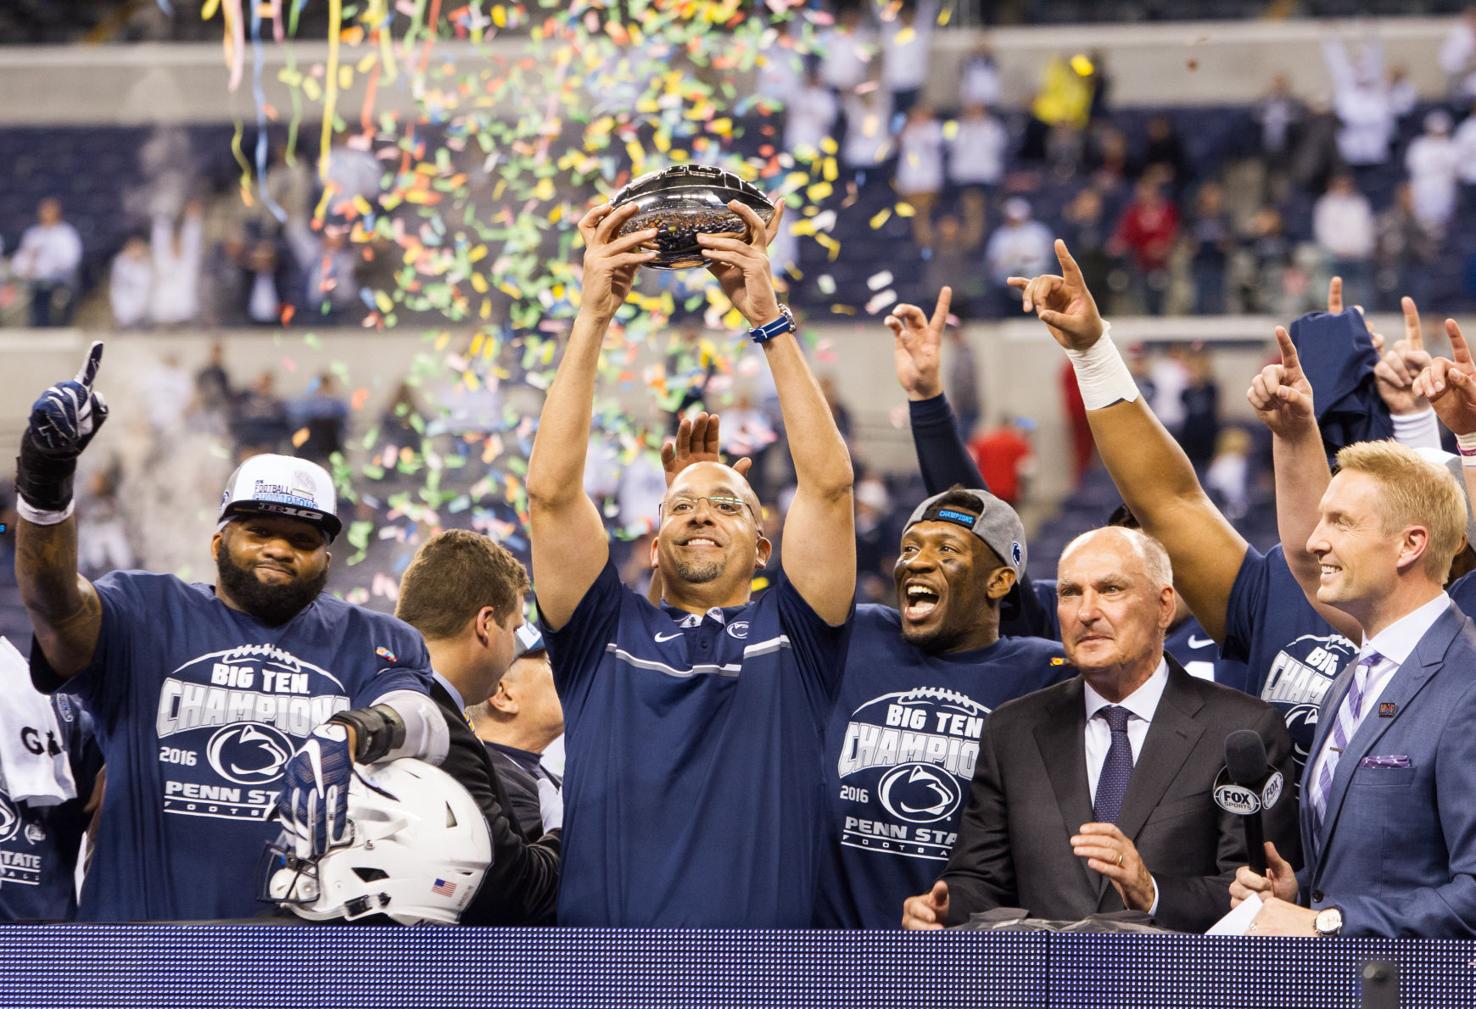 ‘the Return How The 2016 Penn State Football Team Won A Big Ten Championship Reshaped Its 8125